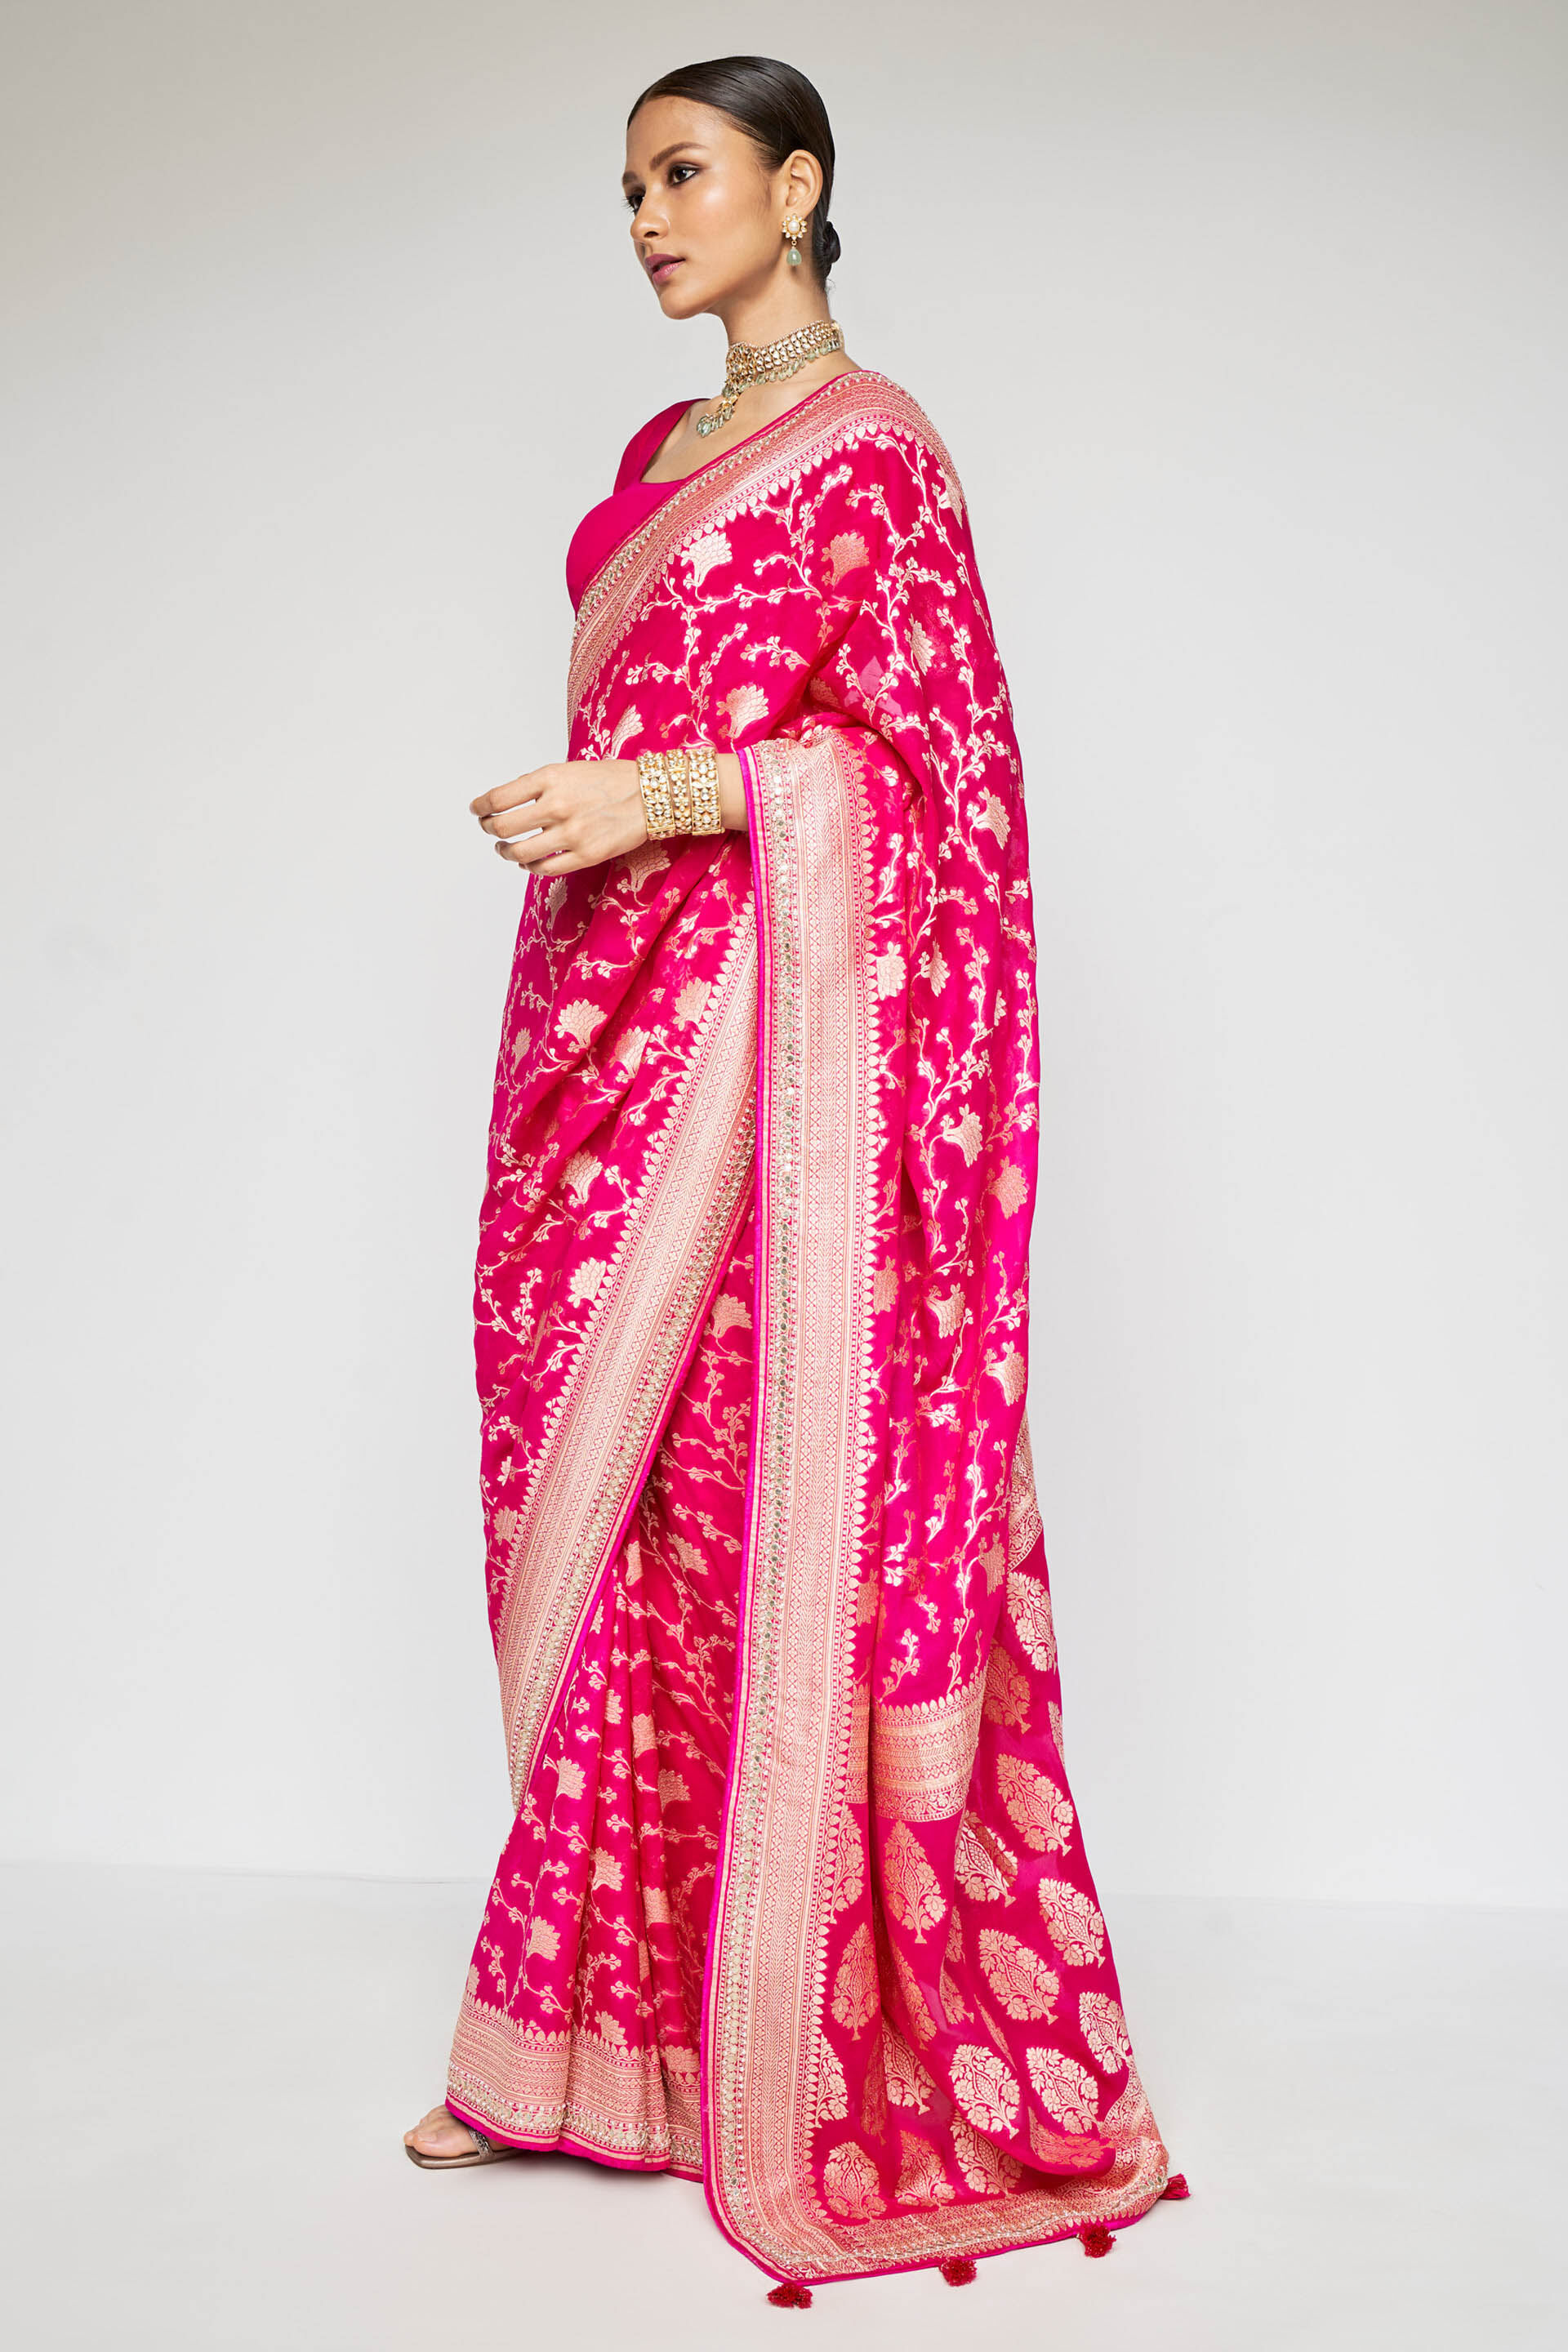 Hot n Sizzling Bollywood Sarees, Designer Bollywood Sarees, Buy Bollywood  Clothing, Bollywood Saris